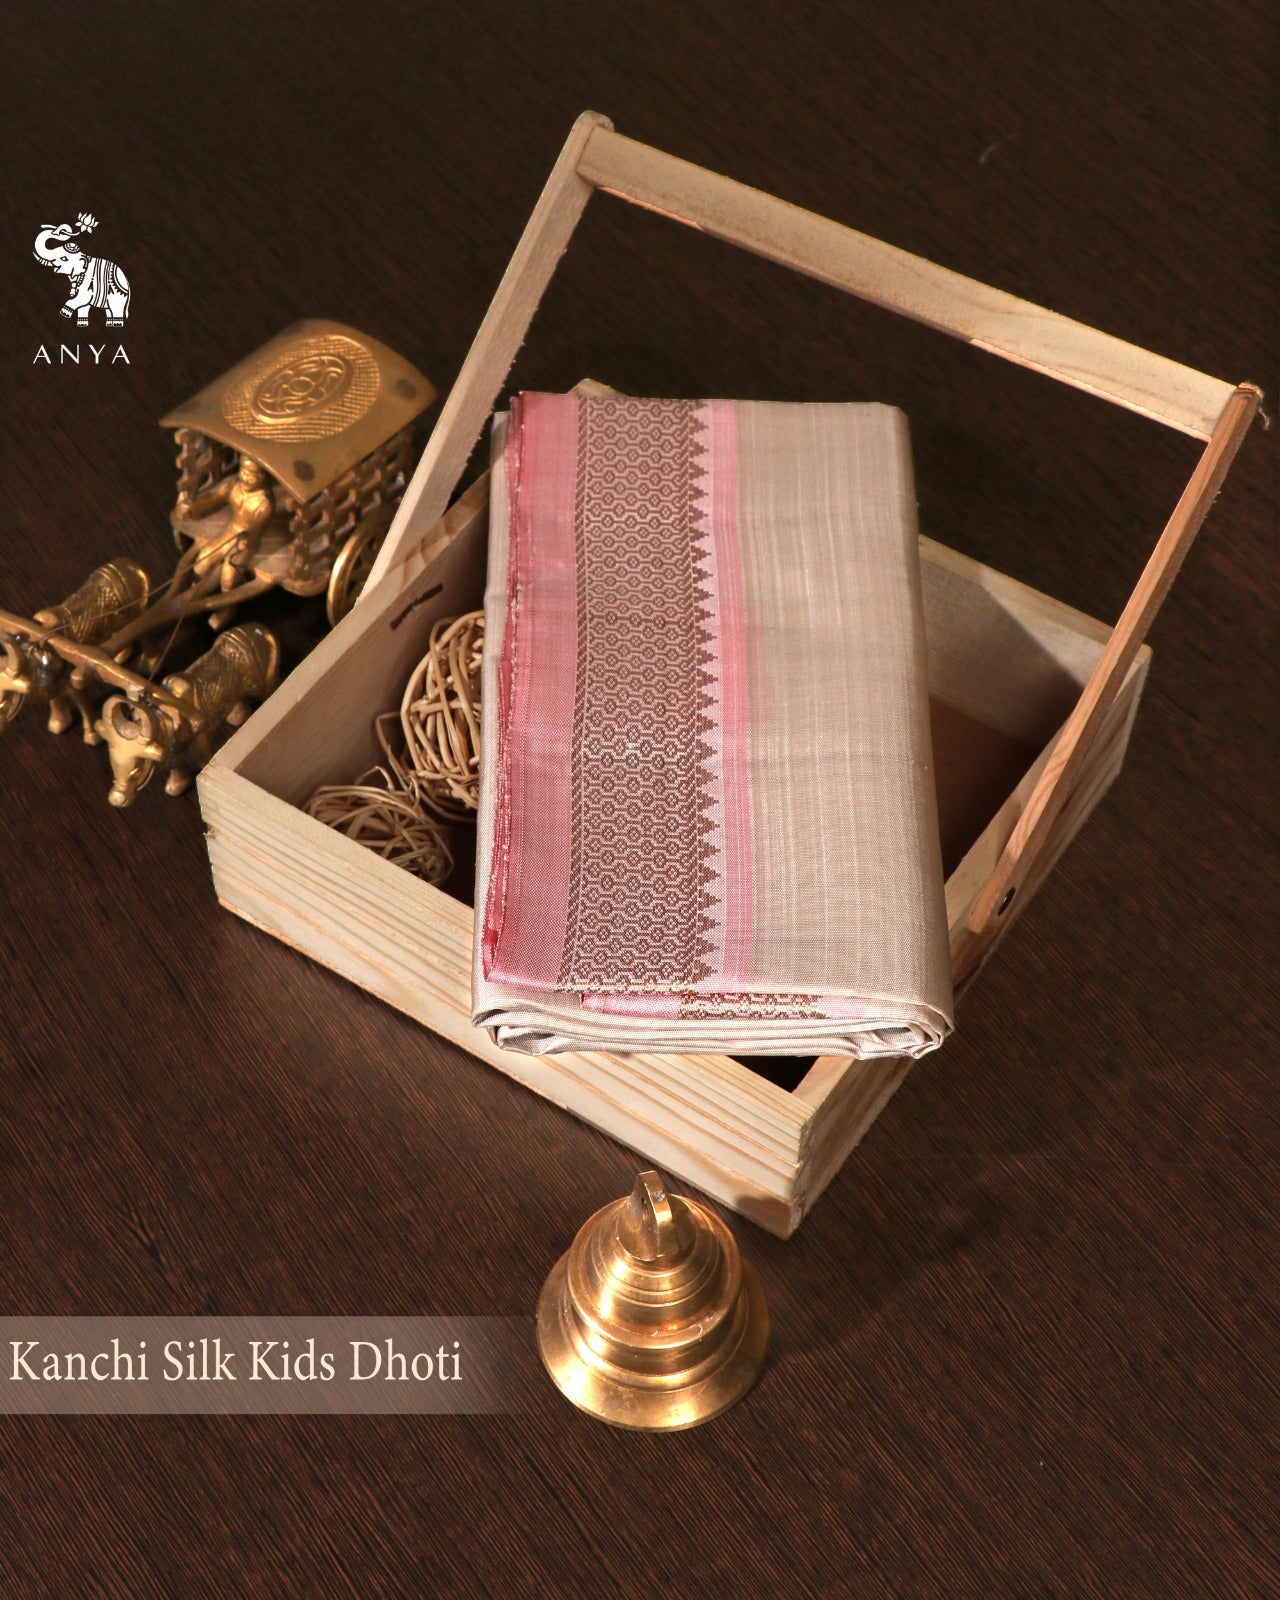 Off White Kanchi Silk Dhoti with Onion Pink Golden Zari Border